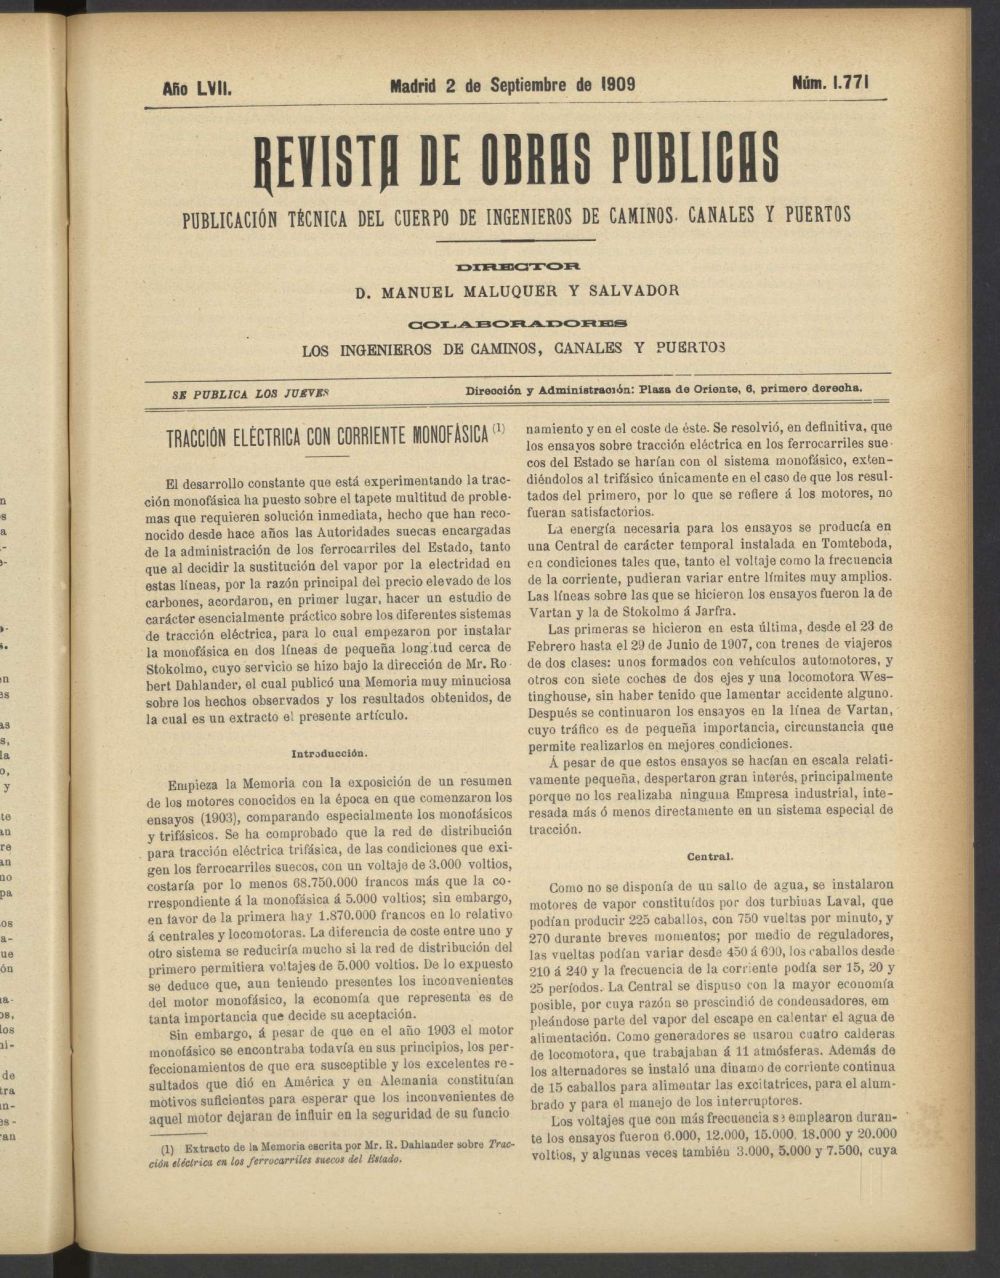 Revista de obras pblicas del 2 de septiembre de 1909